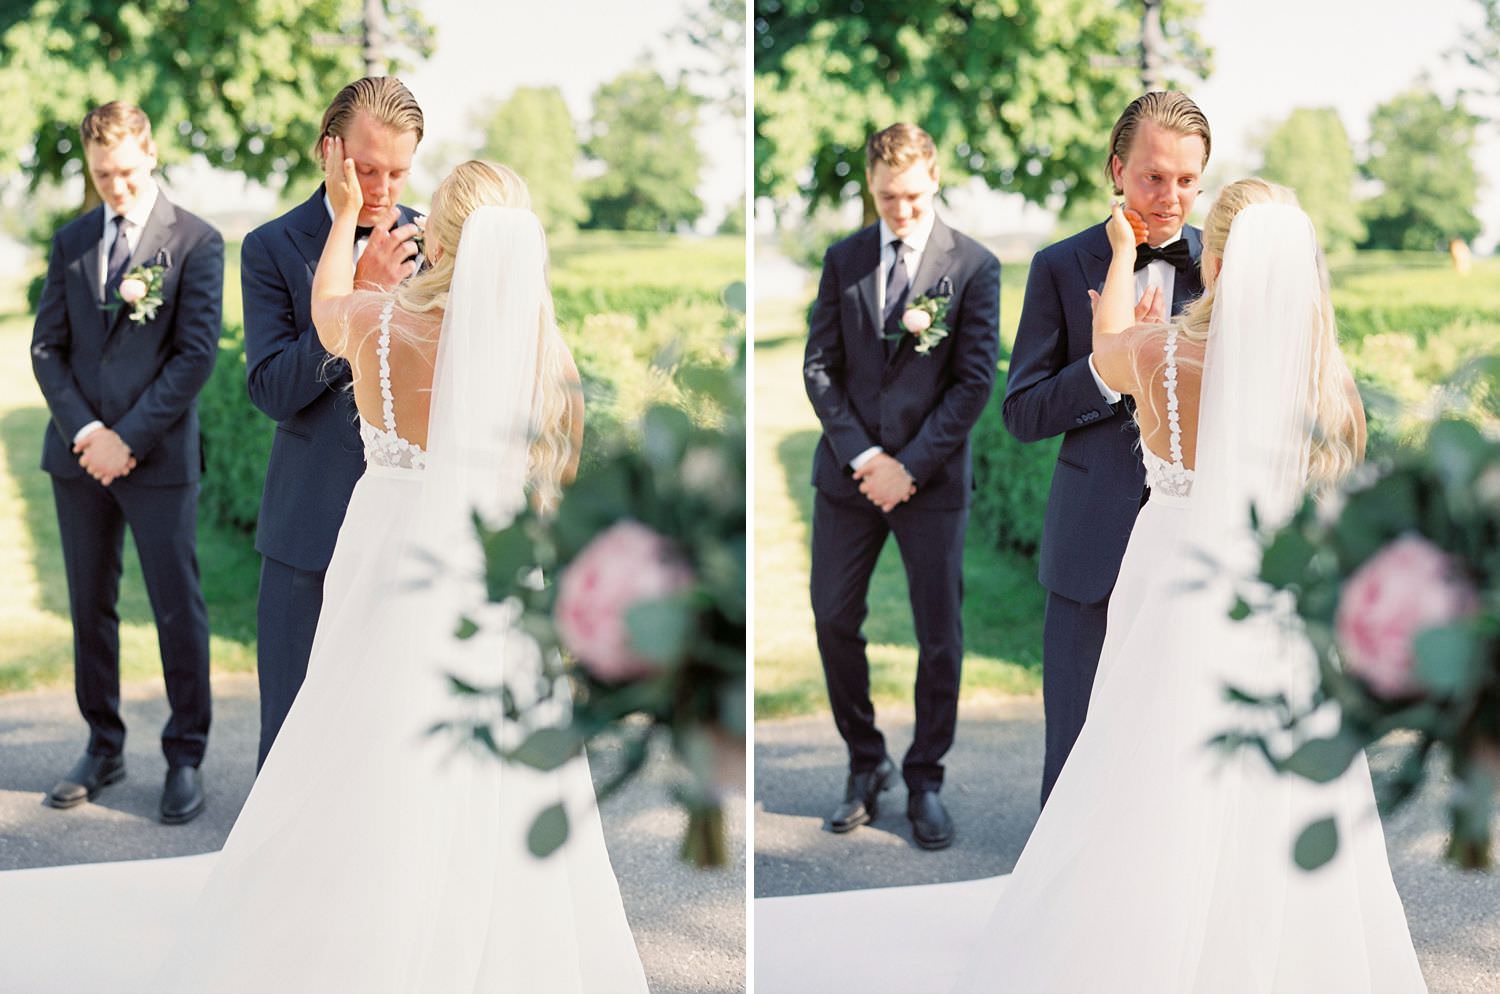 Emotinal groom during the wedding vow exchange